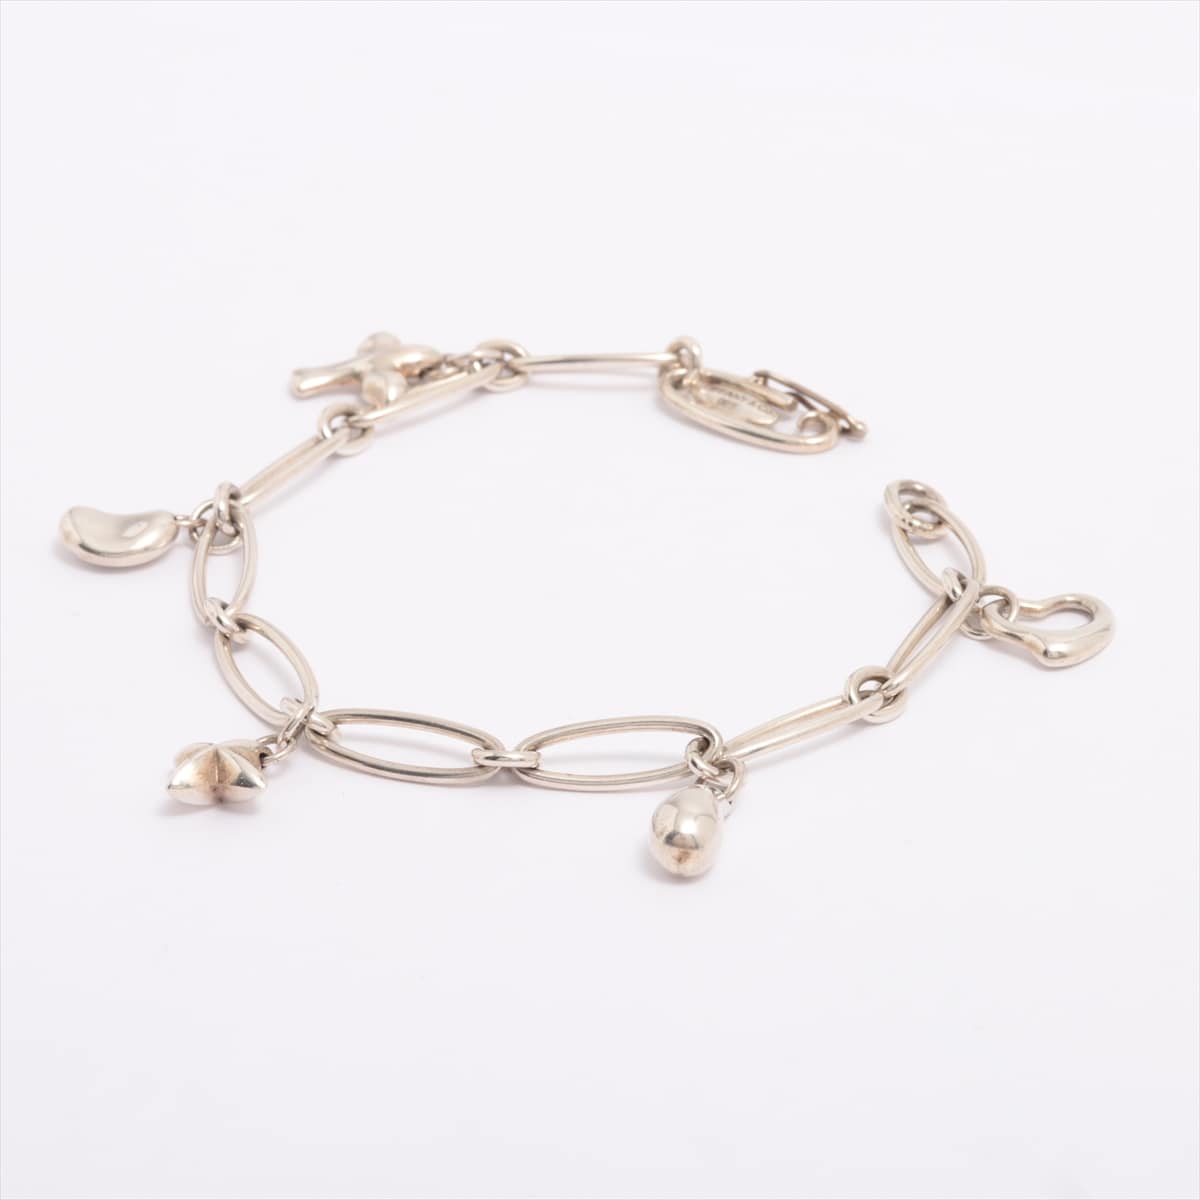 Tiffany Bracelet 925 11.7g Silver Elsa Peretti 5 charms